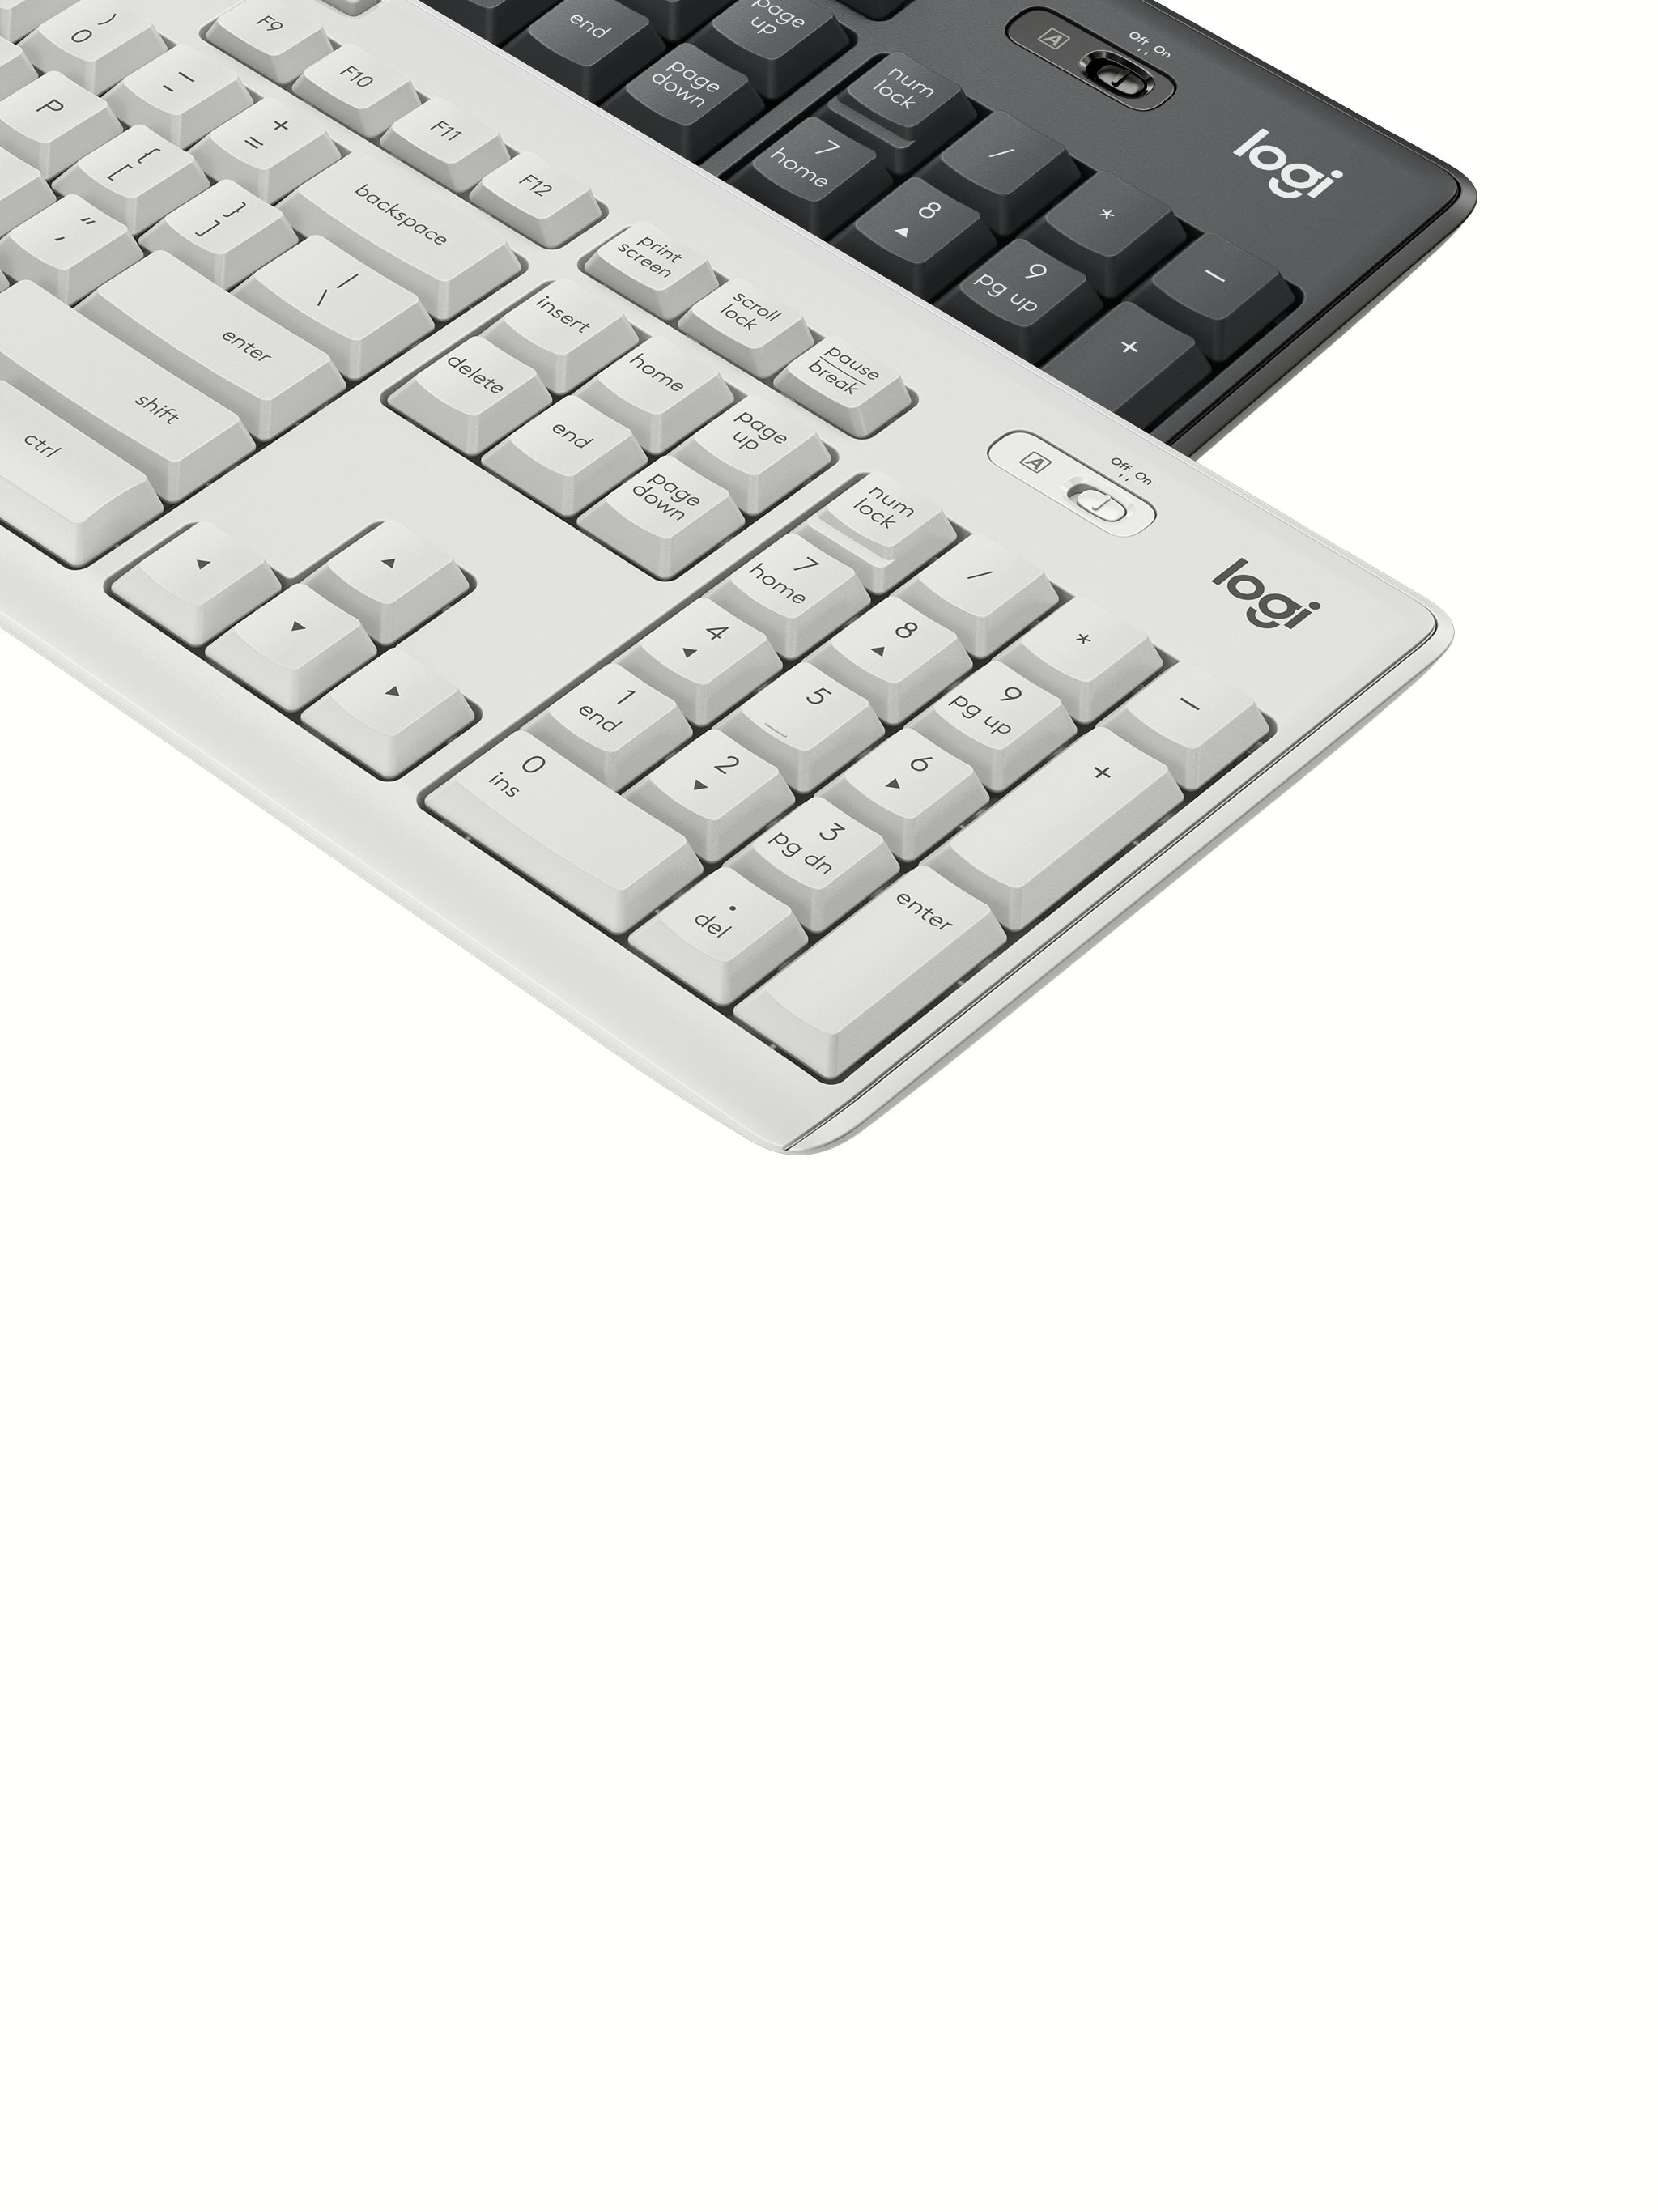 Logitech MK295 Silent Wireless Keyboard Mouse Combo